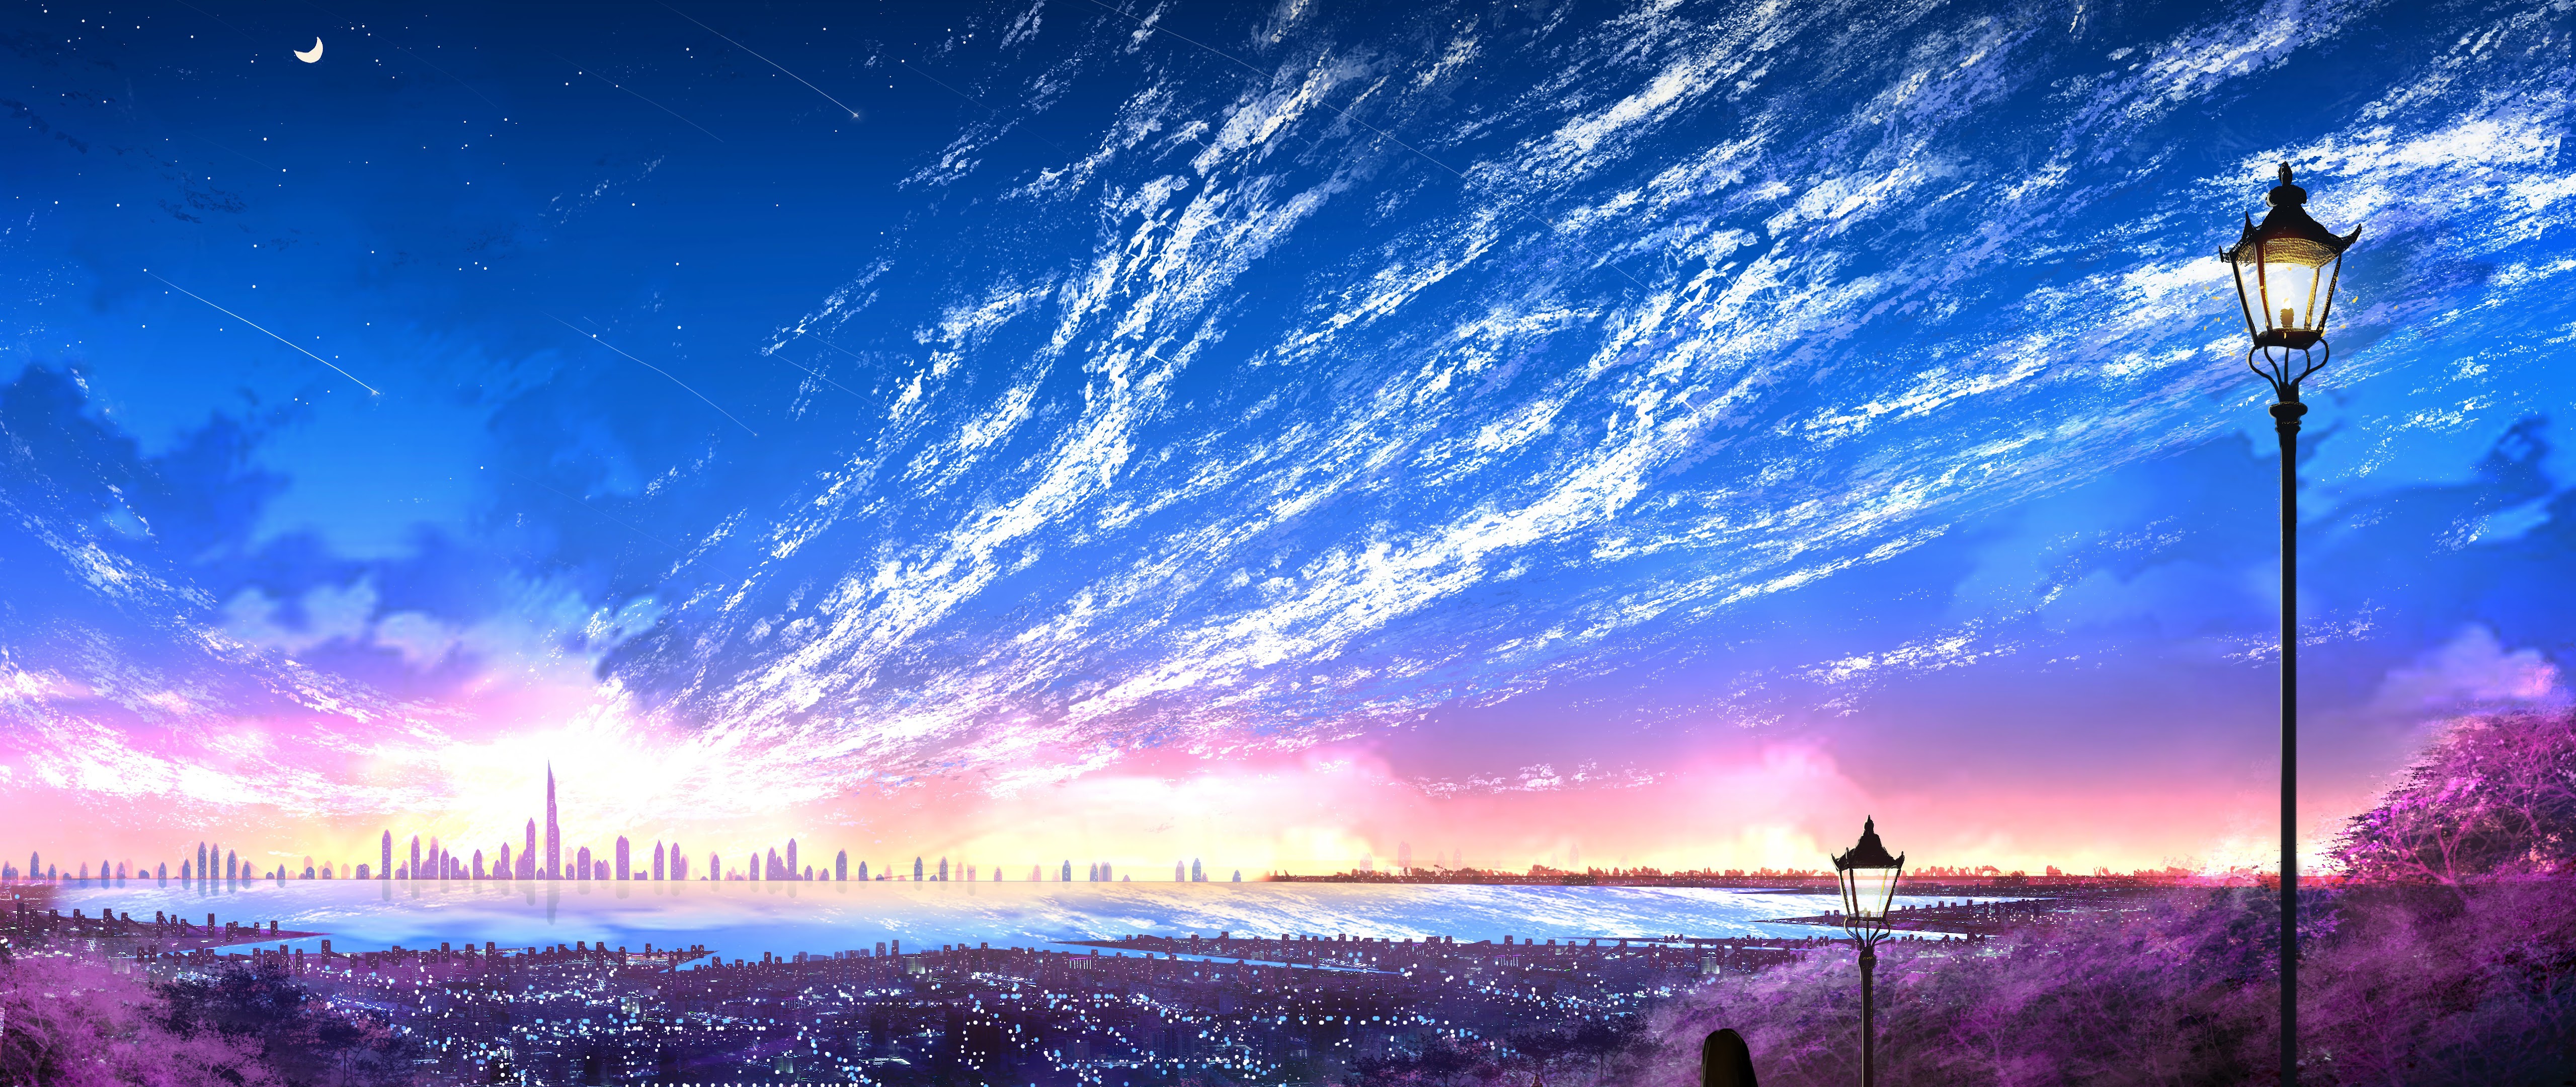 Sky City Scenery Horizon Landscape Anime 8K Wallpaper